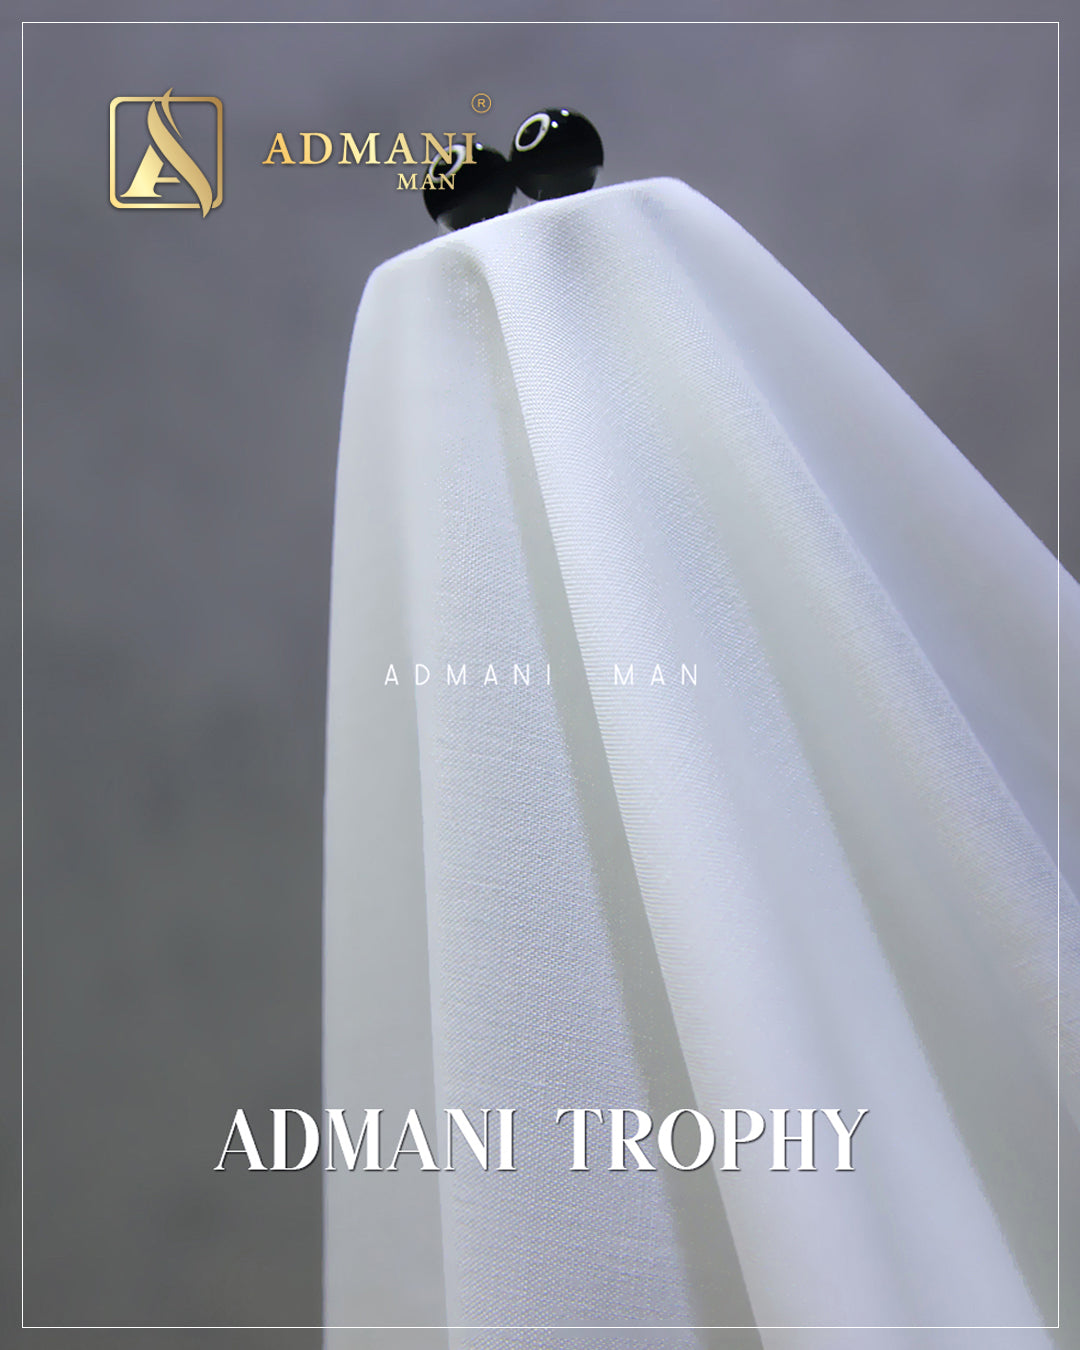 Admani Trophy